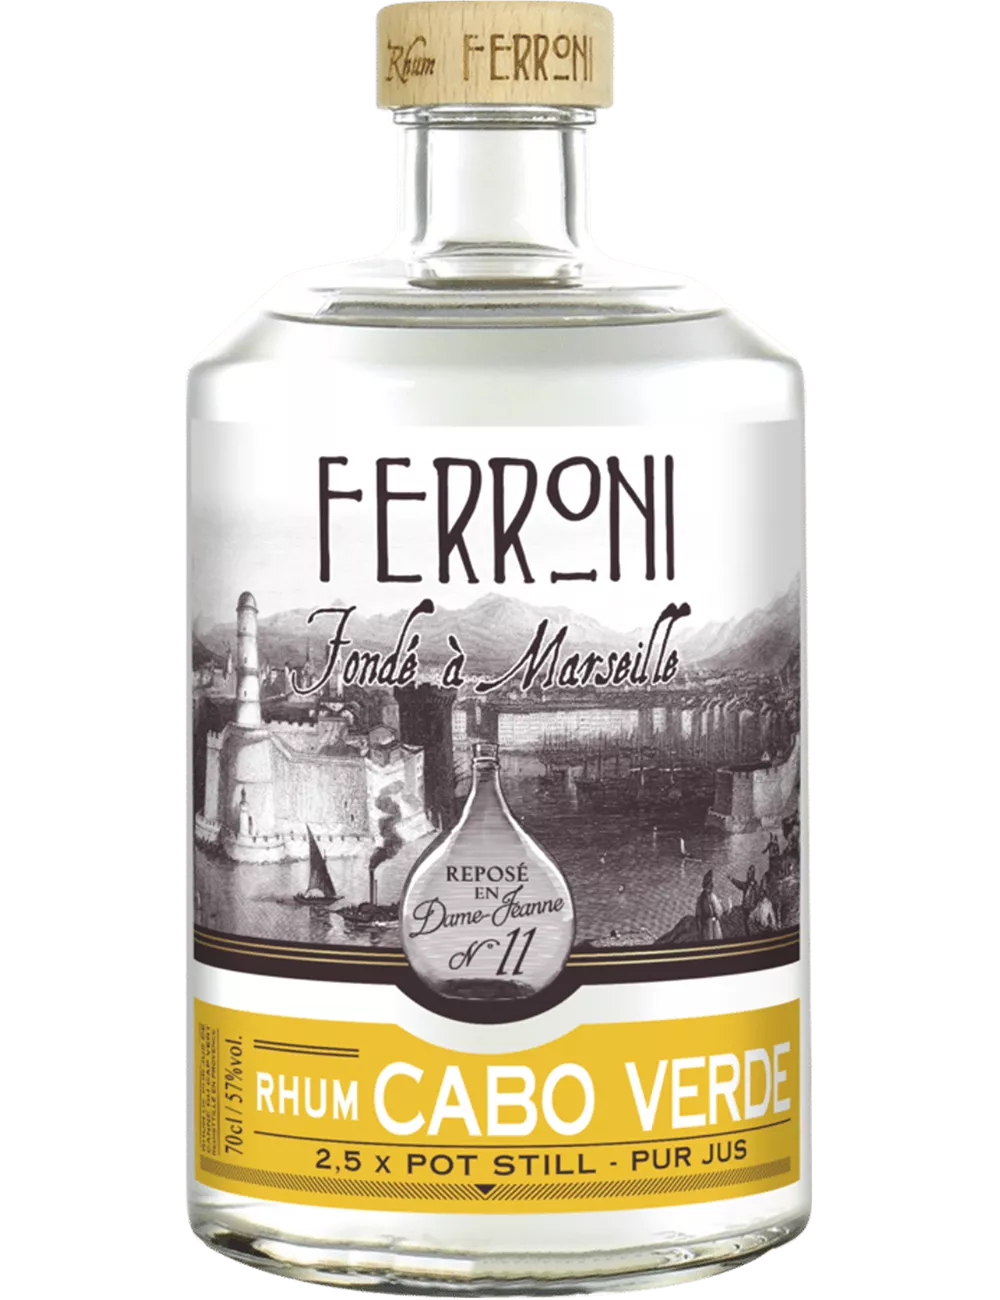 Ferroni - Dame Jeanne - N°11 Cabo Verde - Rhum 100% pur jus de canne blanc